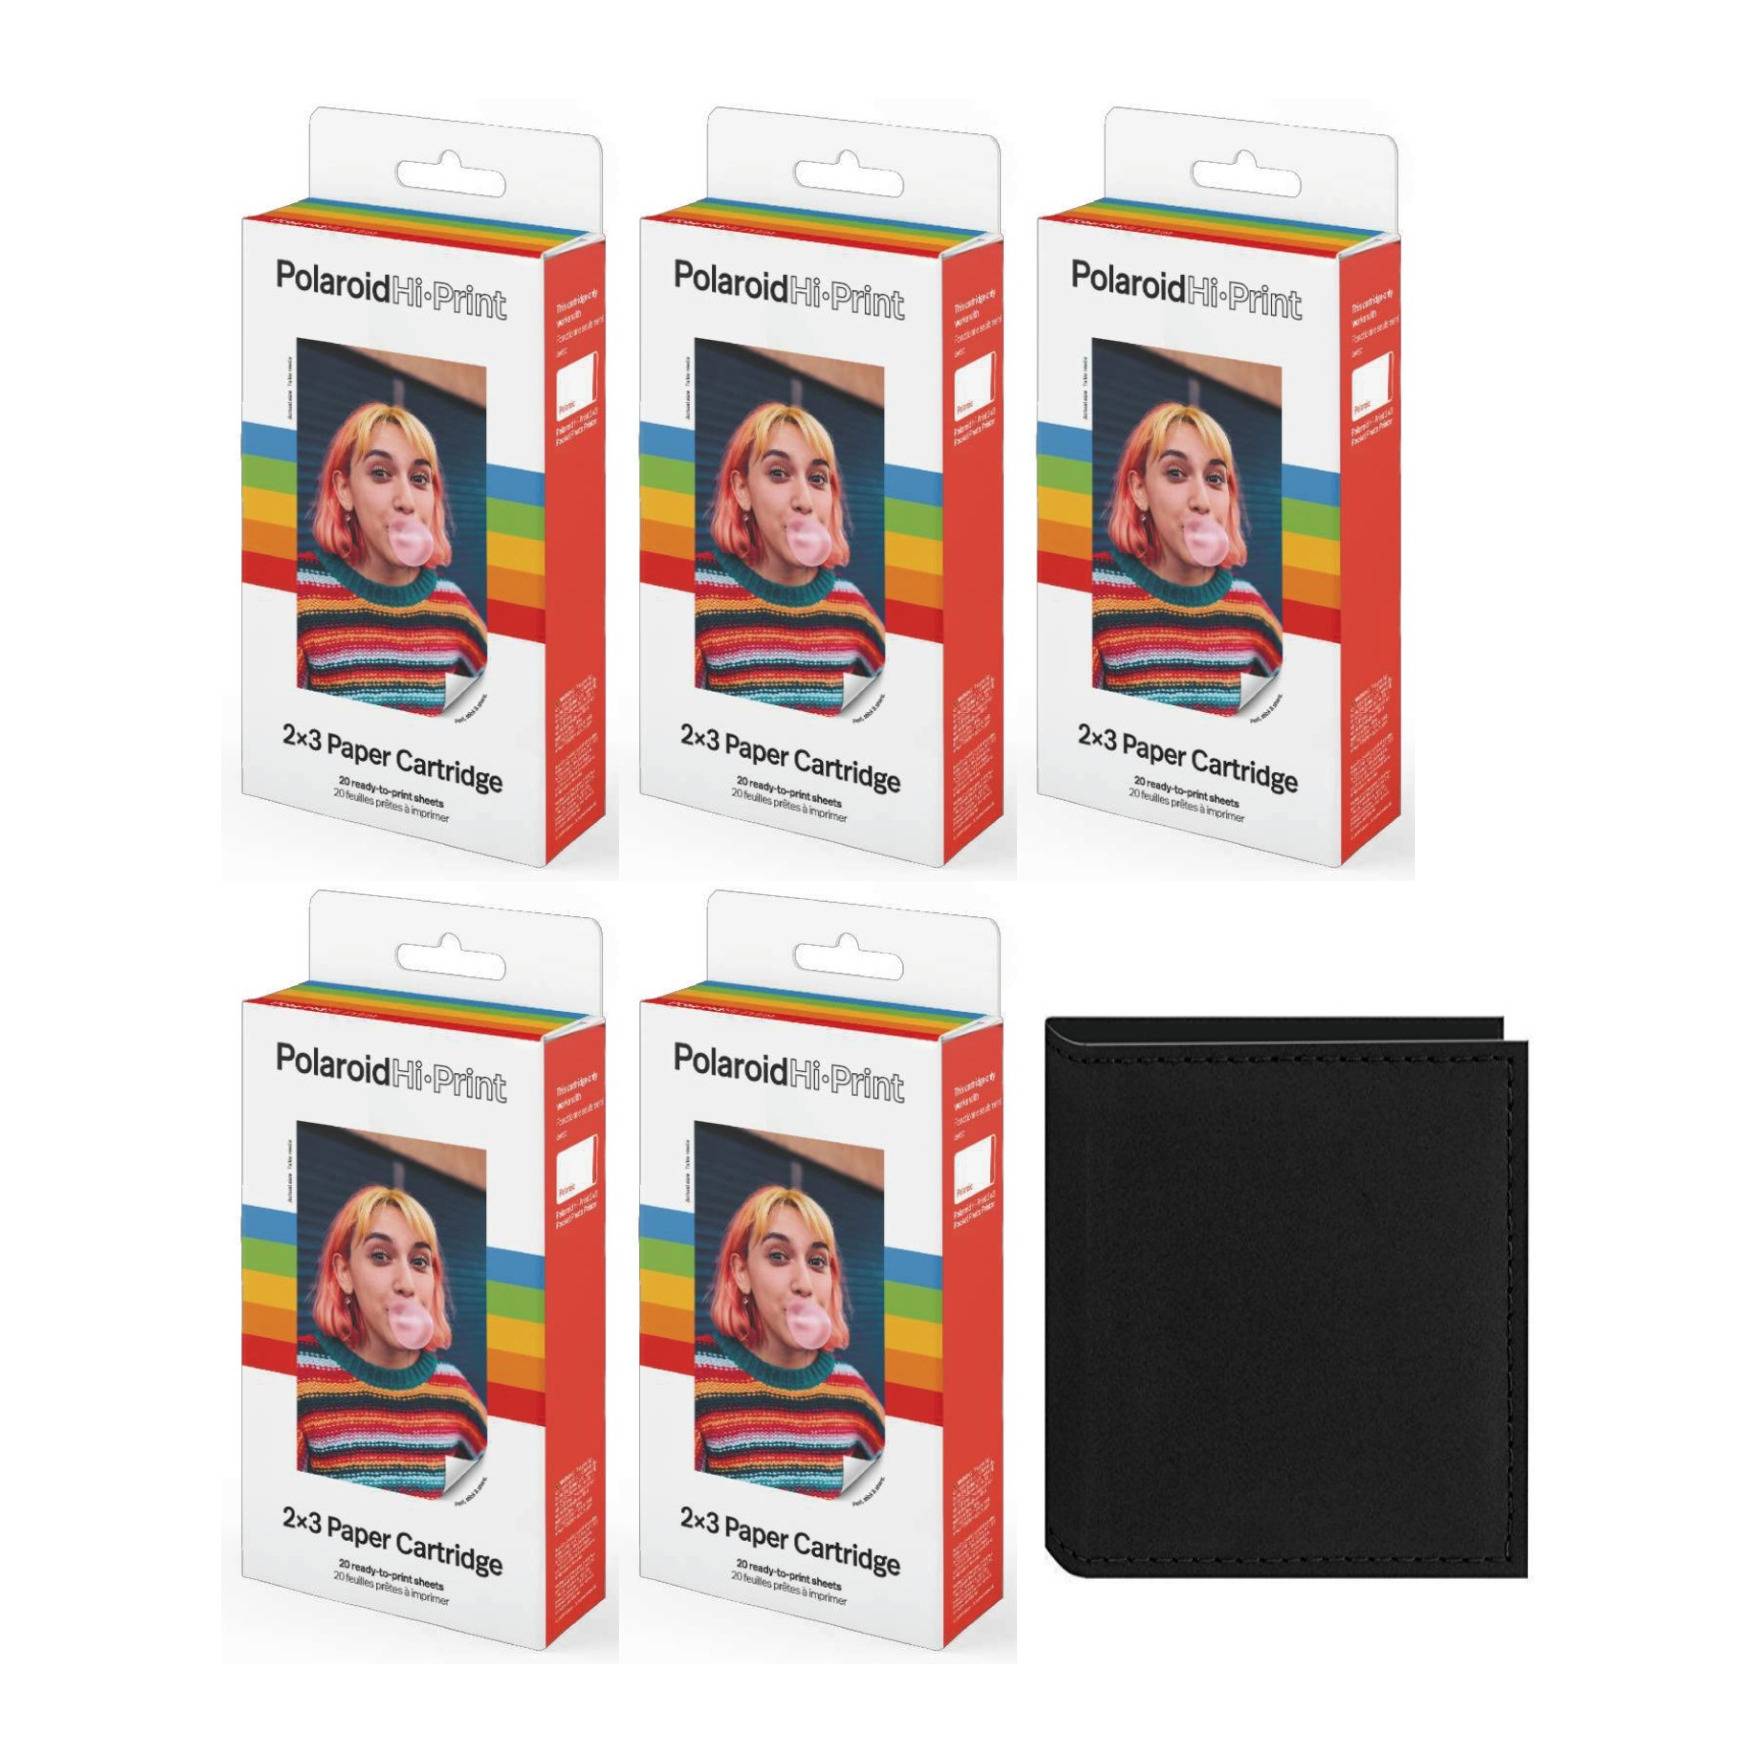 Polaroid Originals Hi-Print 2x3-Inch Paper Cartridge Party Pack of 5 (100 Sheets)